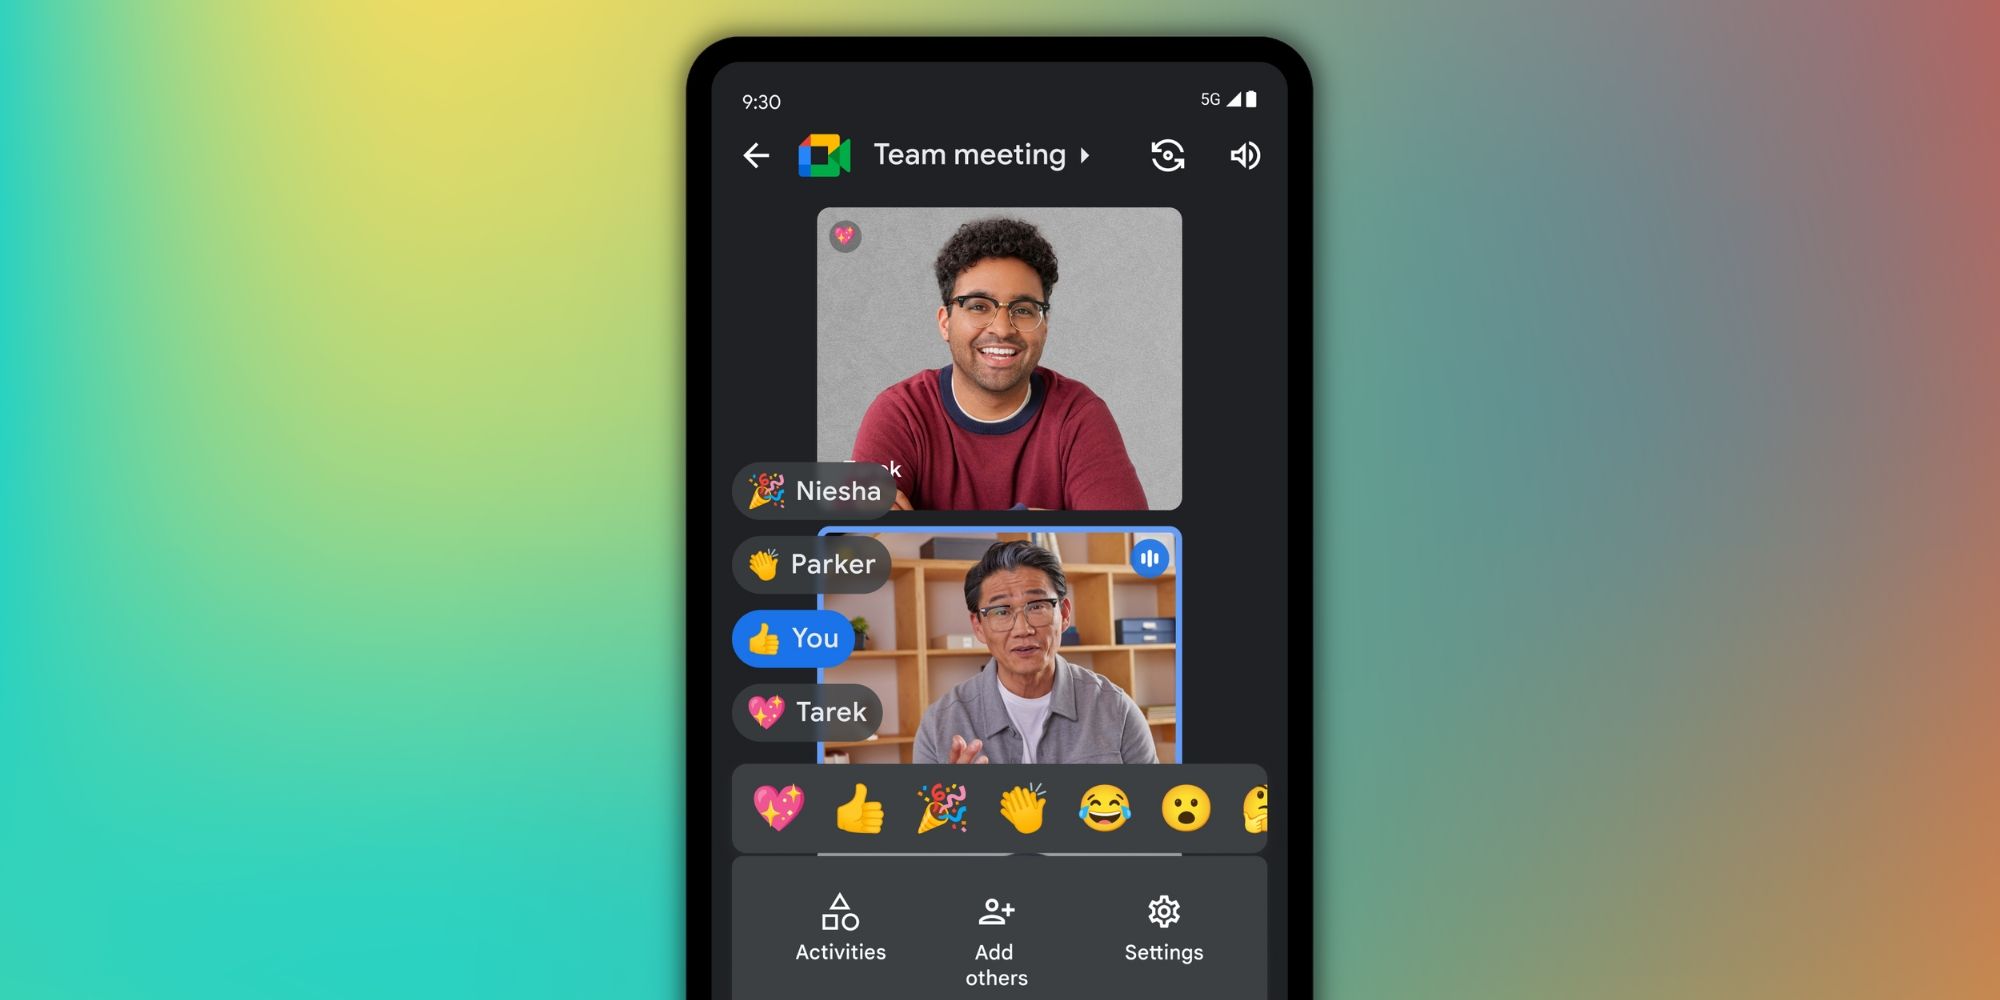 Google Meet emoji reactions on a mobile screen